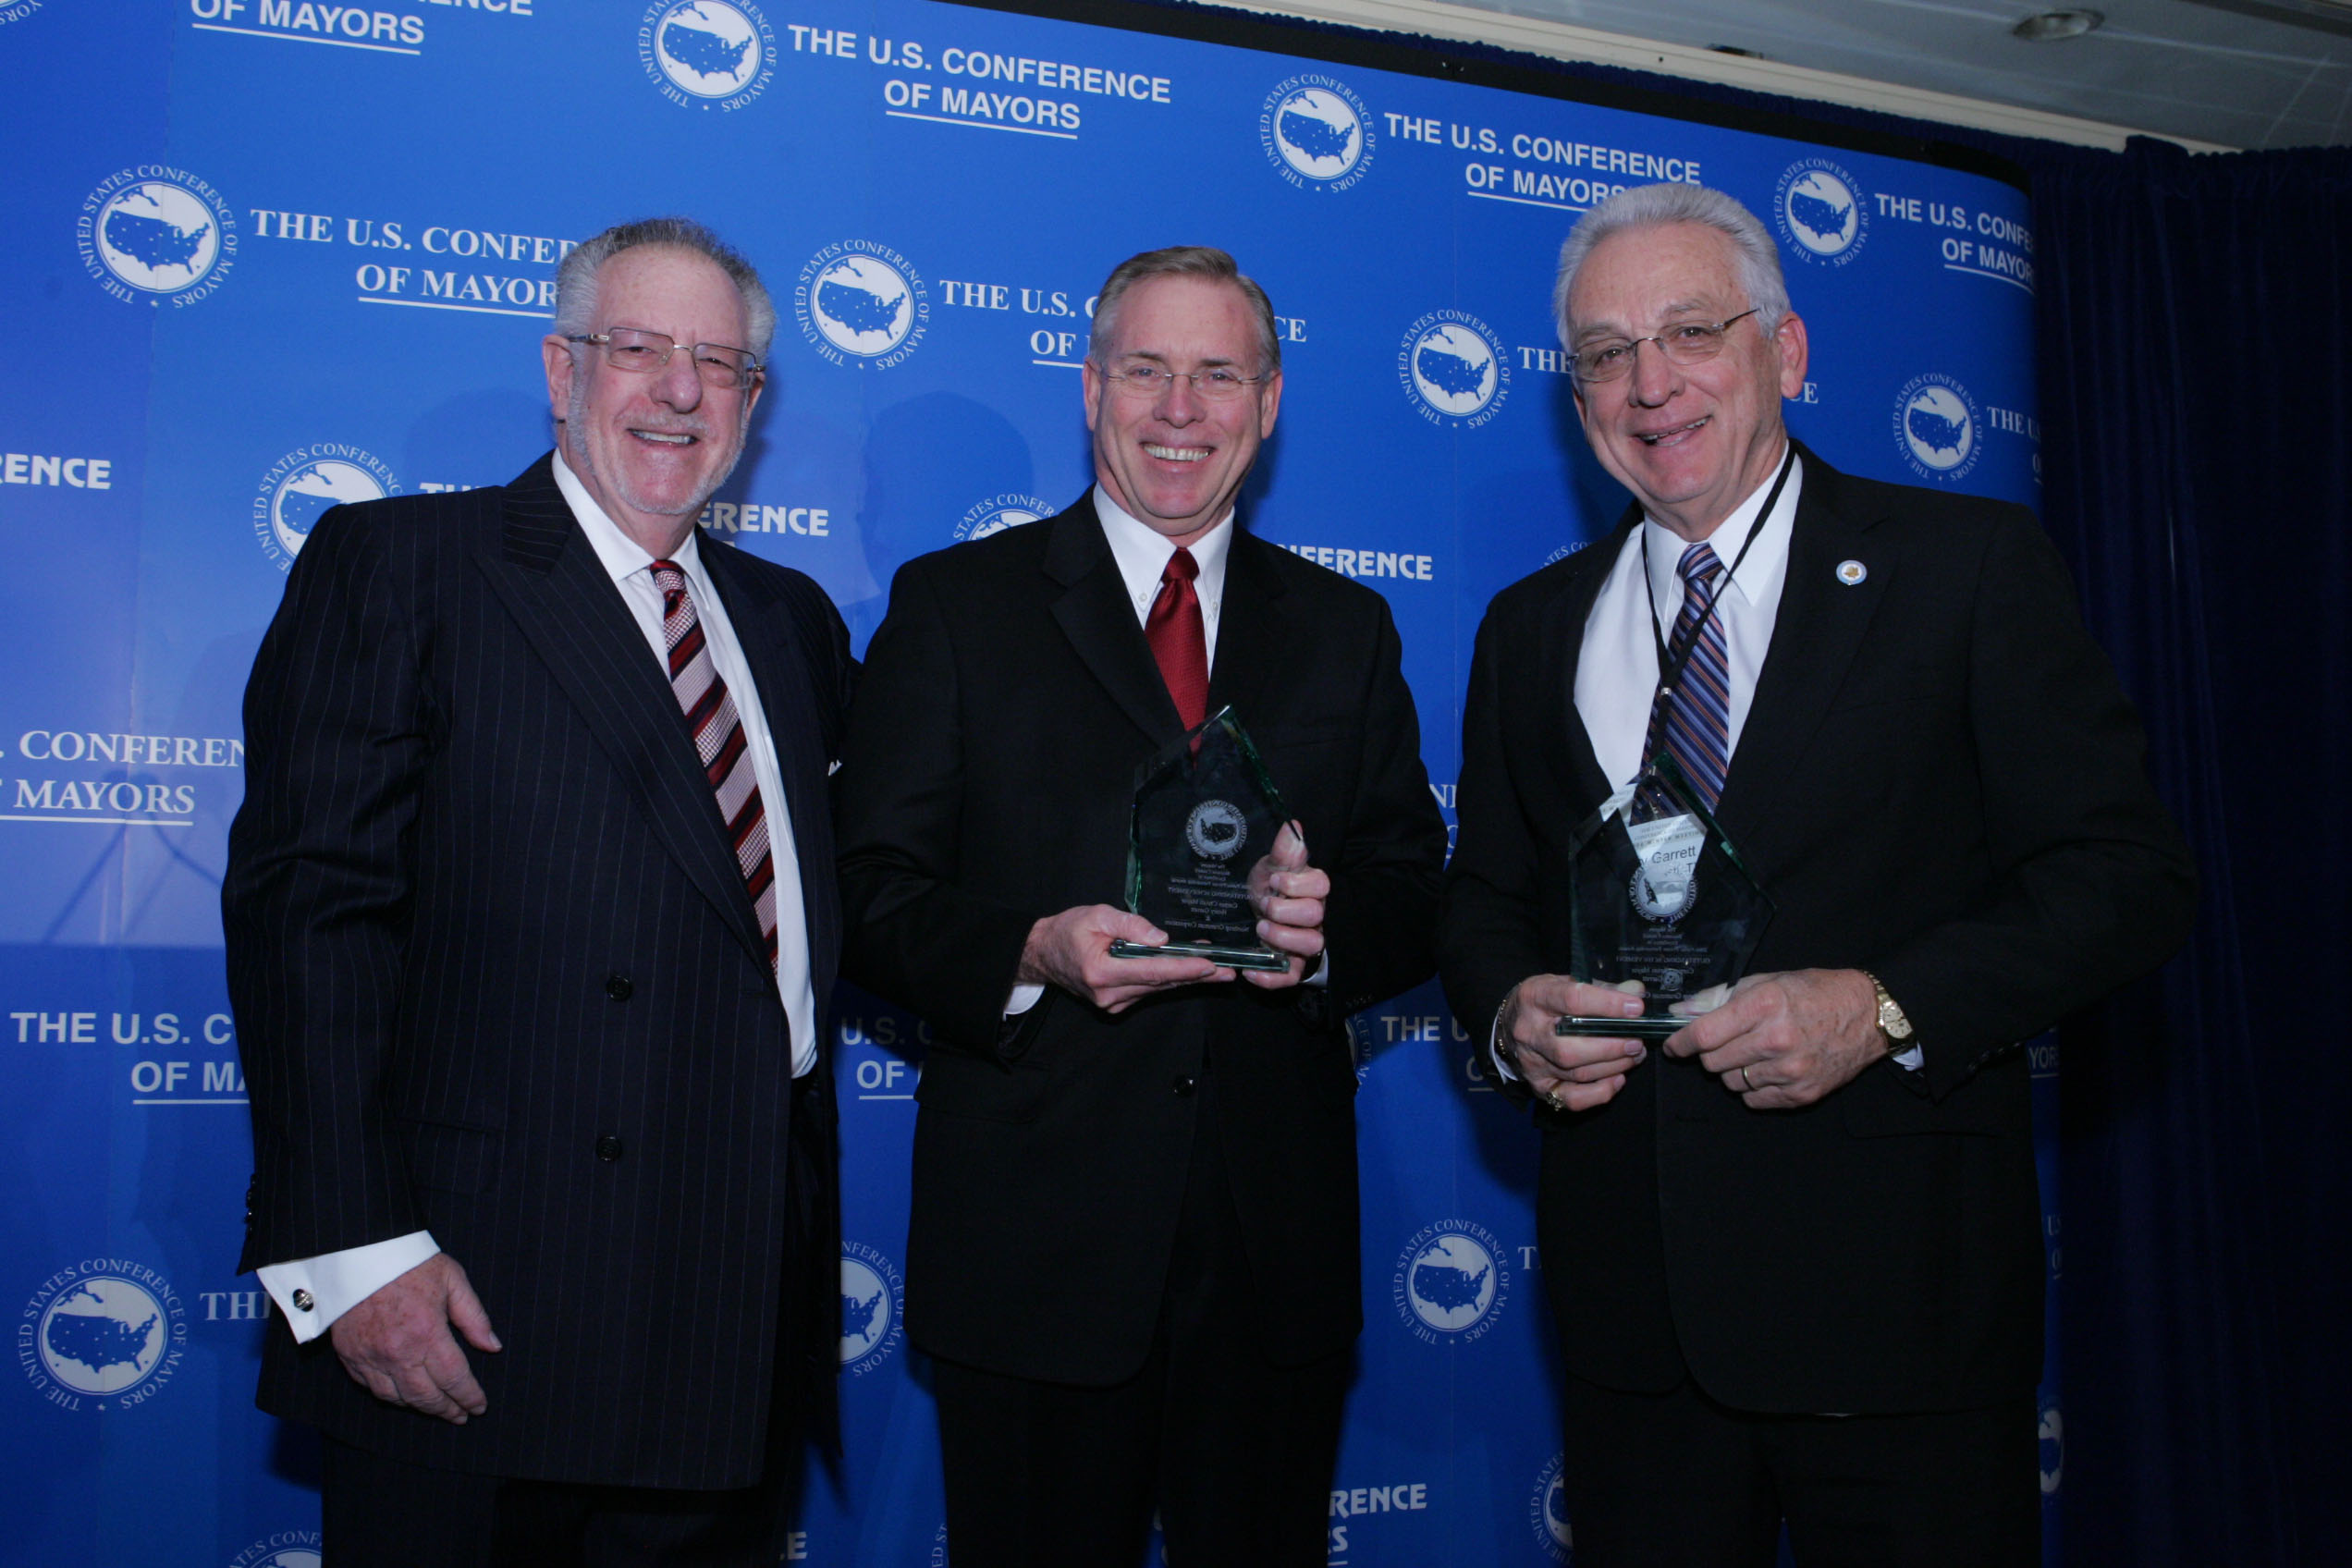 U.S. Conference of Mayors Award